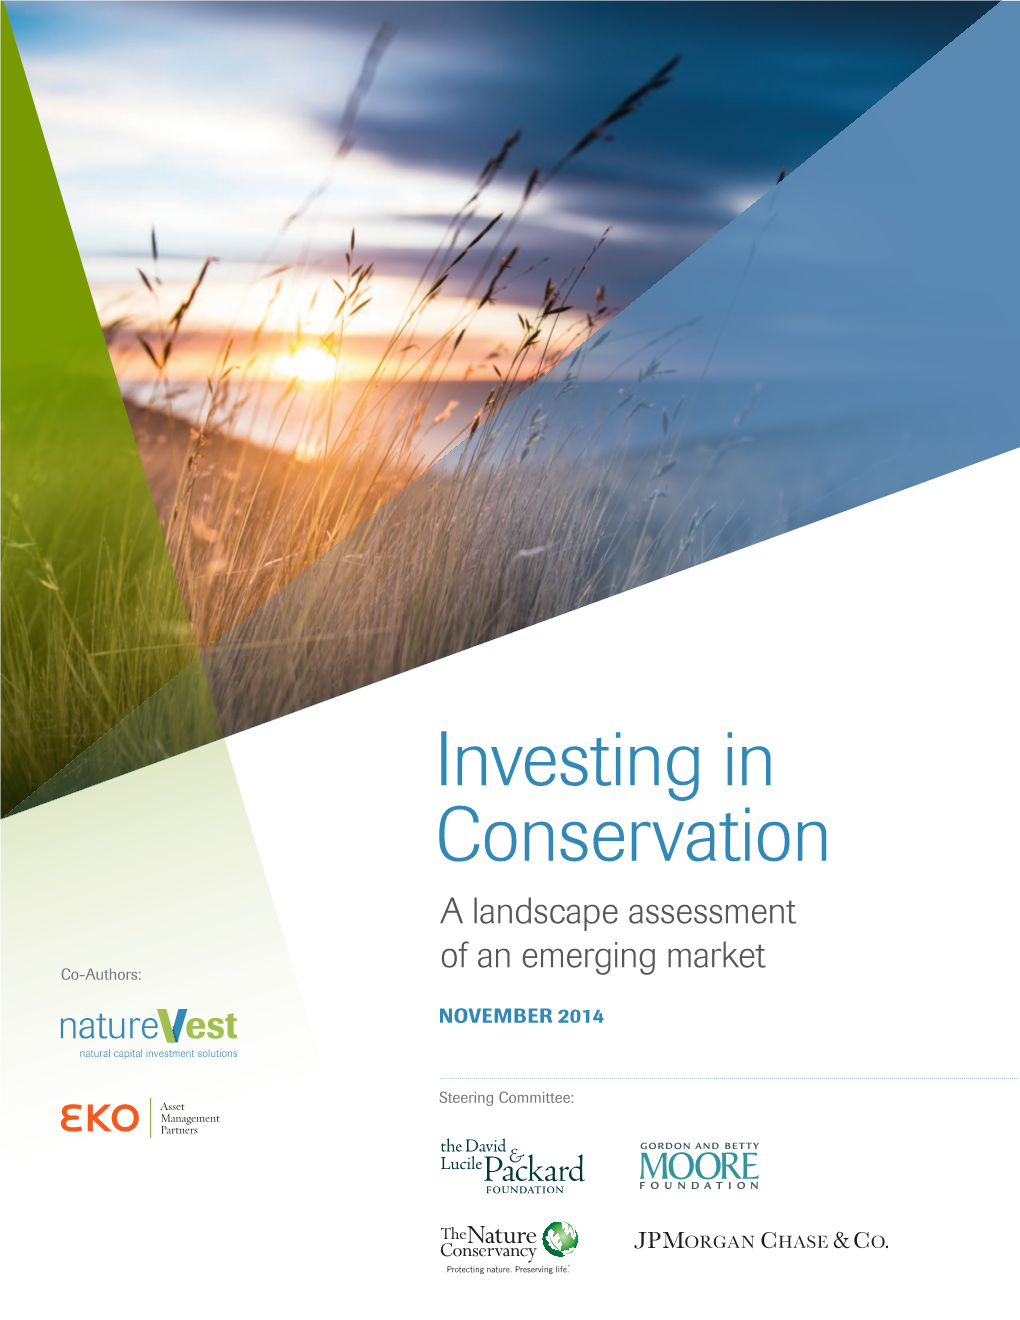 Investing in Conservation a Landscape Assessment